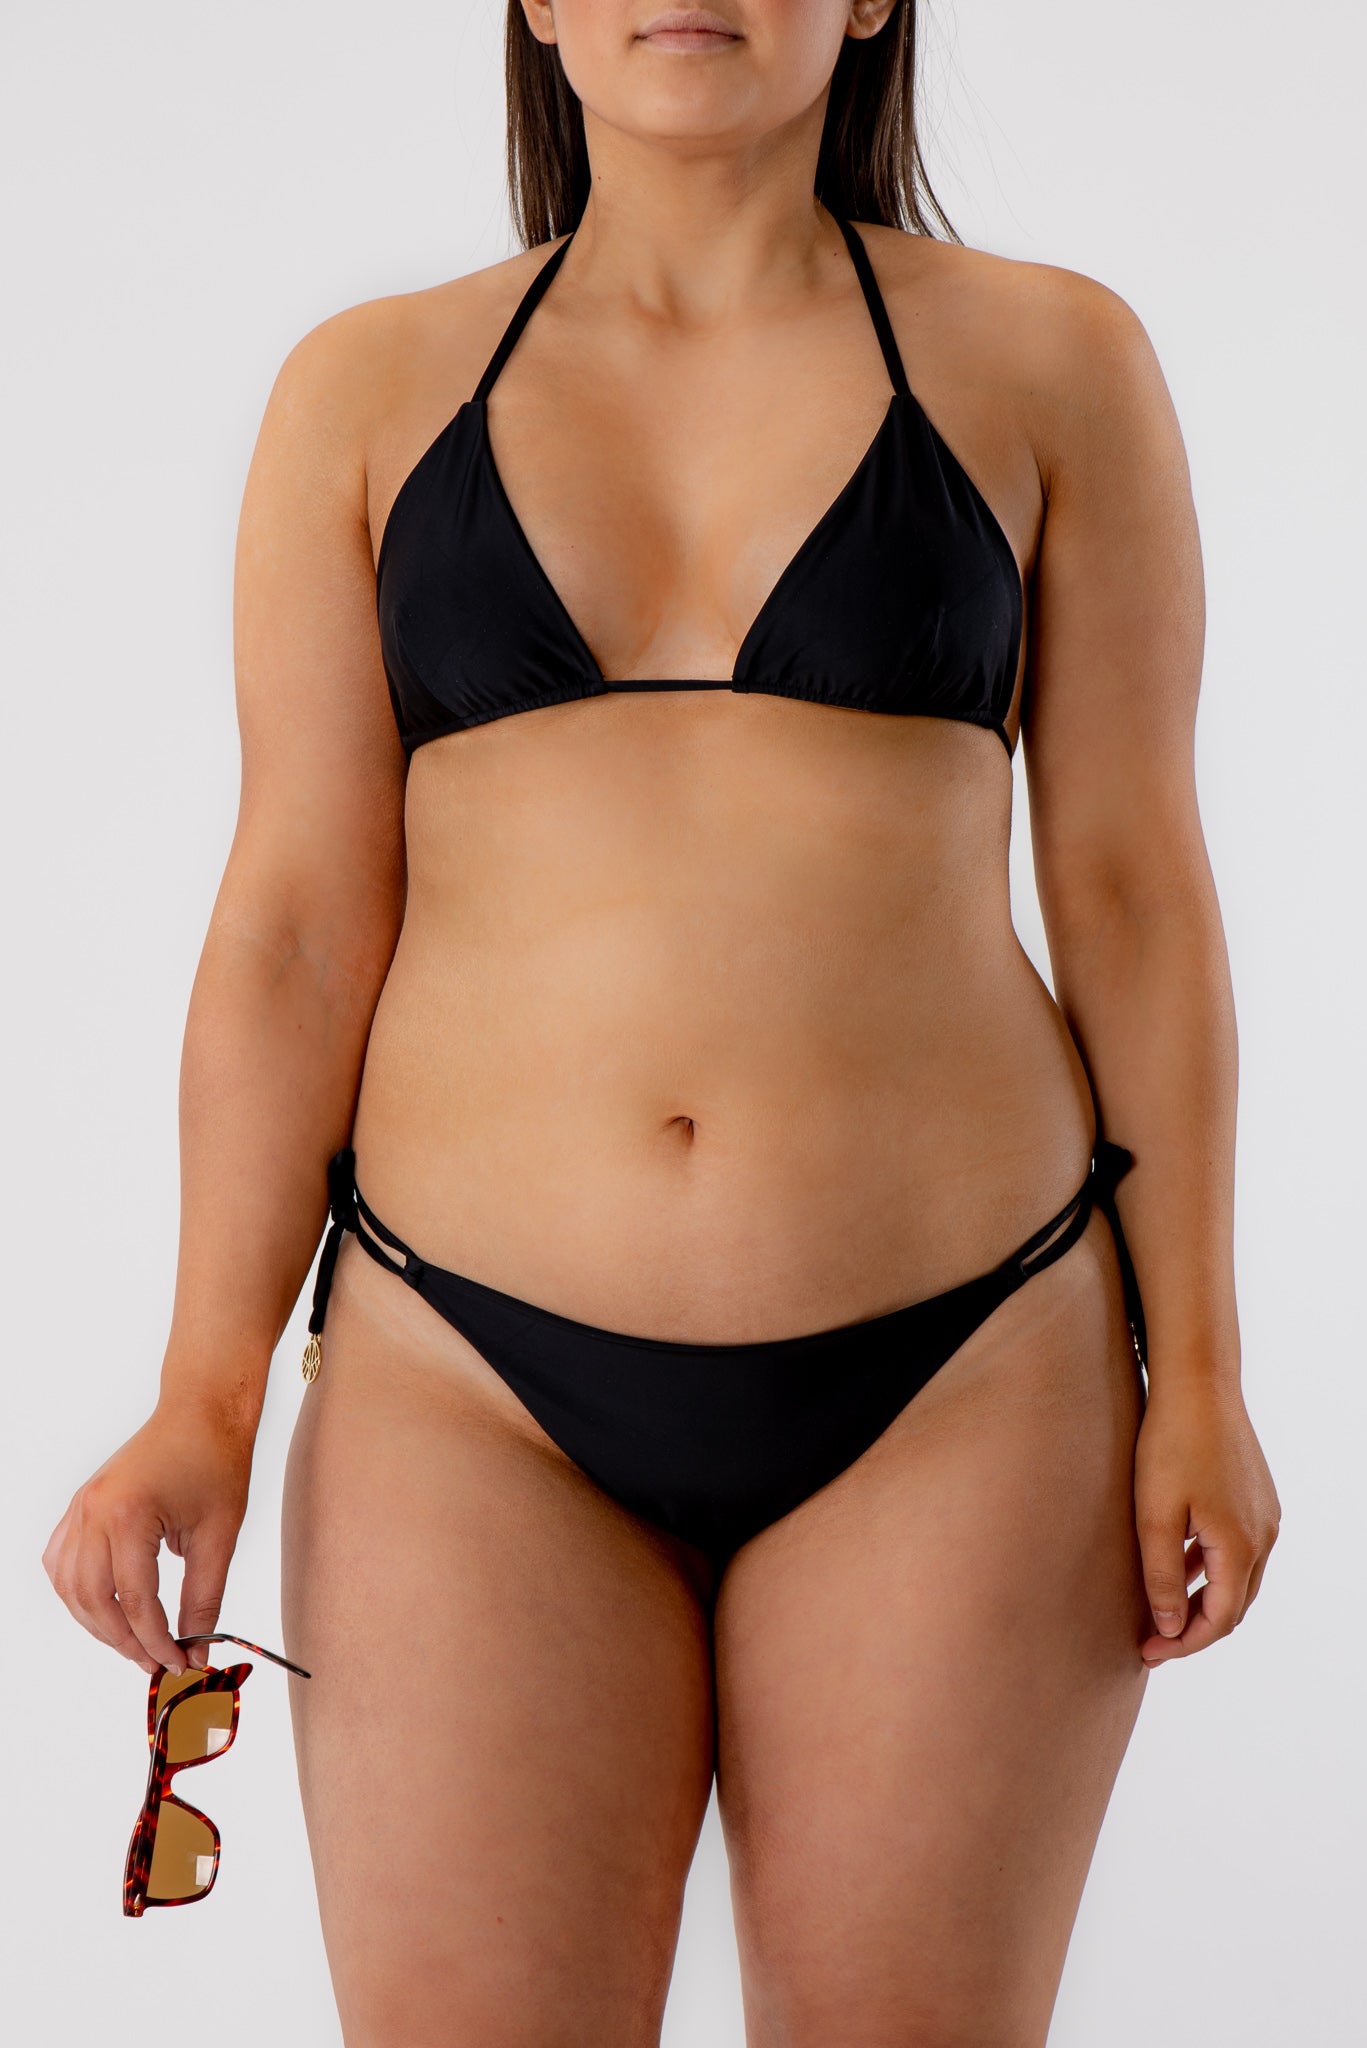 Body - Slider Triangle Bikini Top - Black